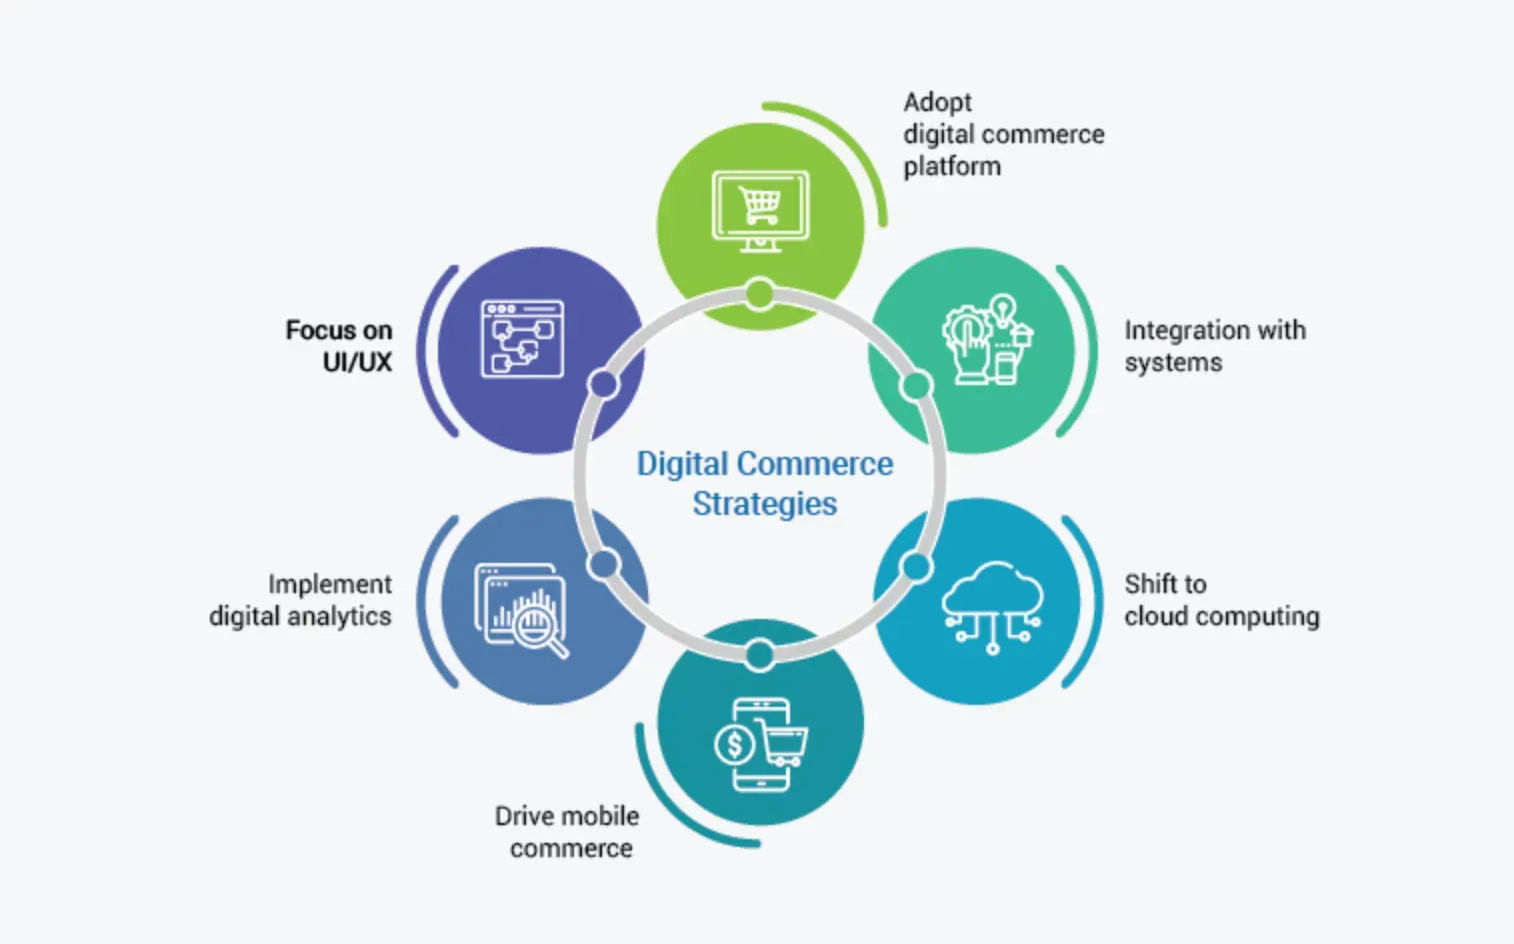 Digital Commerce strategies